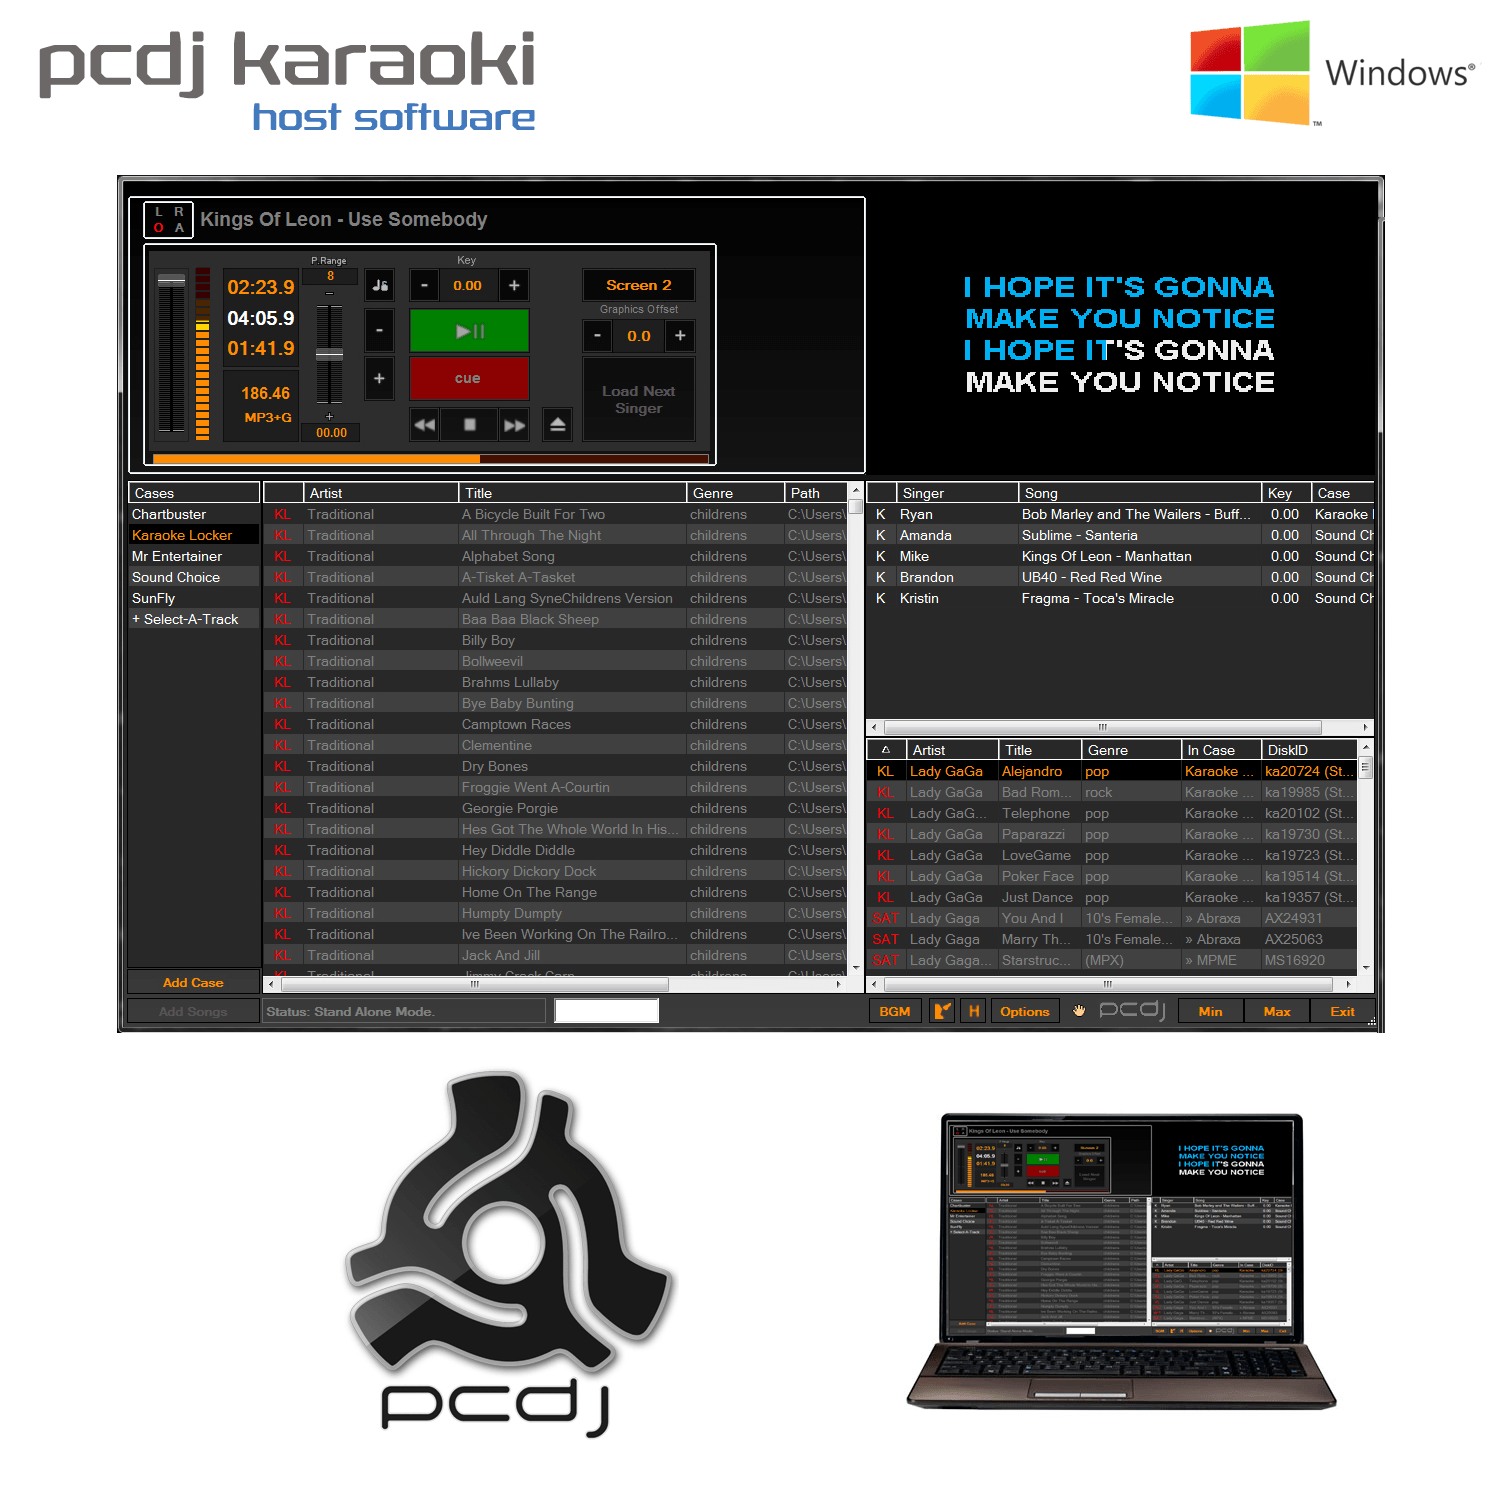 PCDJ Karaoki Hosting Software (Karaoke MP3+G Playback) Windows PC (Download Version) - Karaoke Home Entertainment